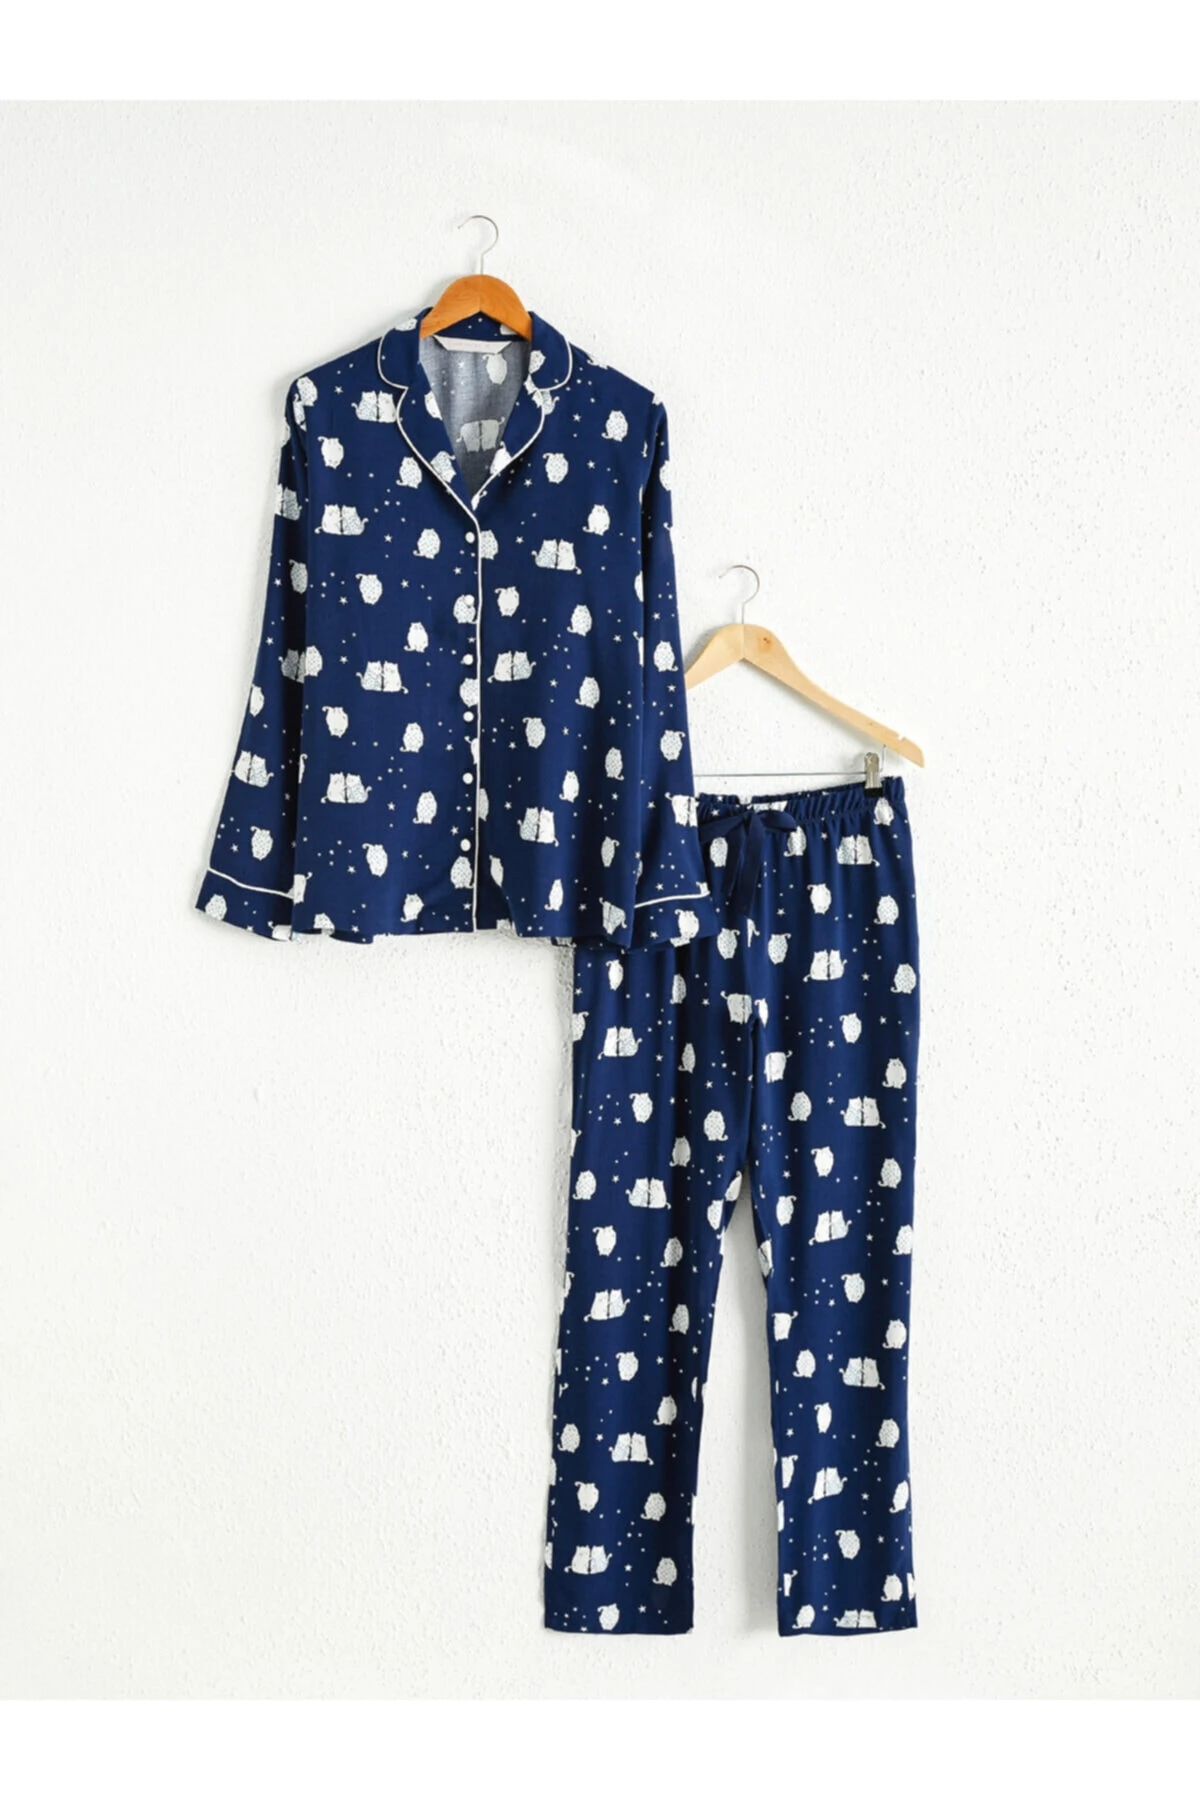 LC Waikiki Woman Pyjamas Set Viscose 100% Turkish Textile Soft Cozy  Sleepwear Jammies Bedwear LCW night suit|Pajama Sets| - AliExpress